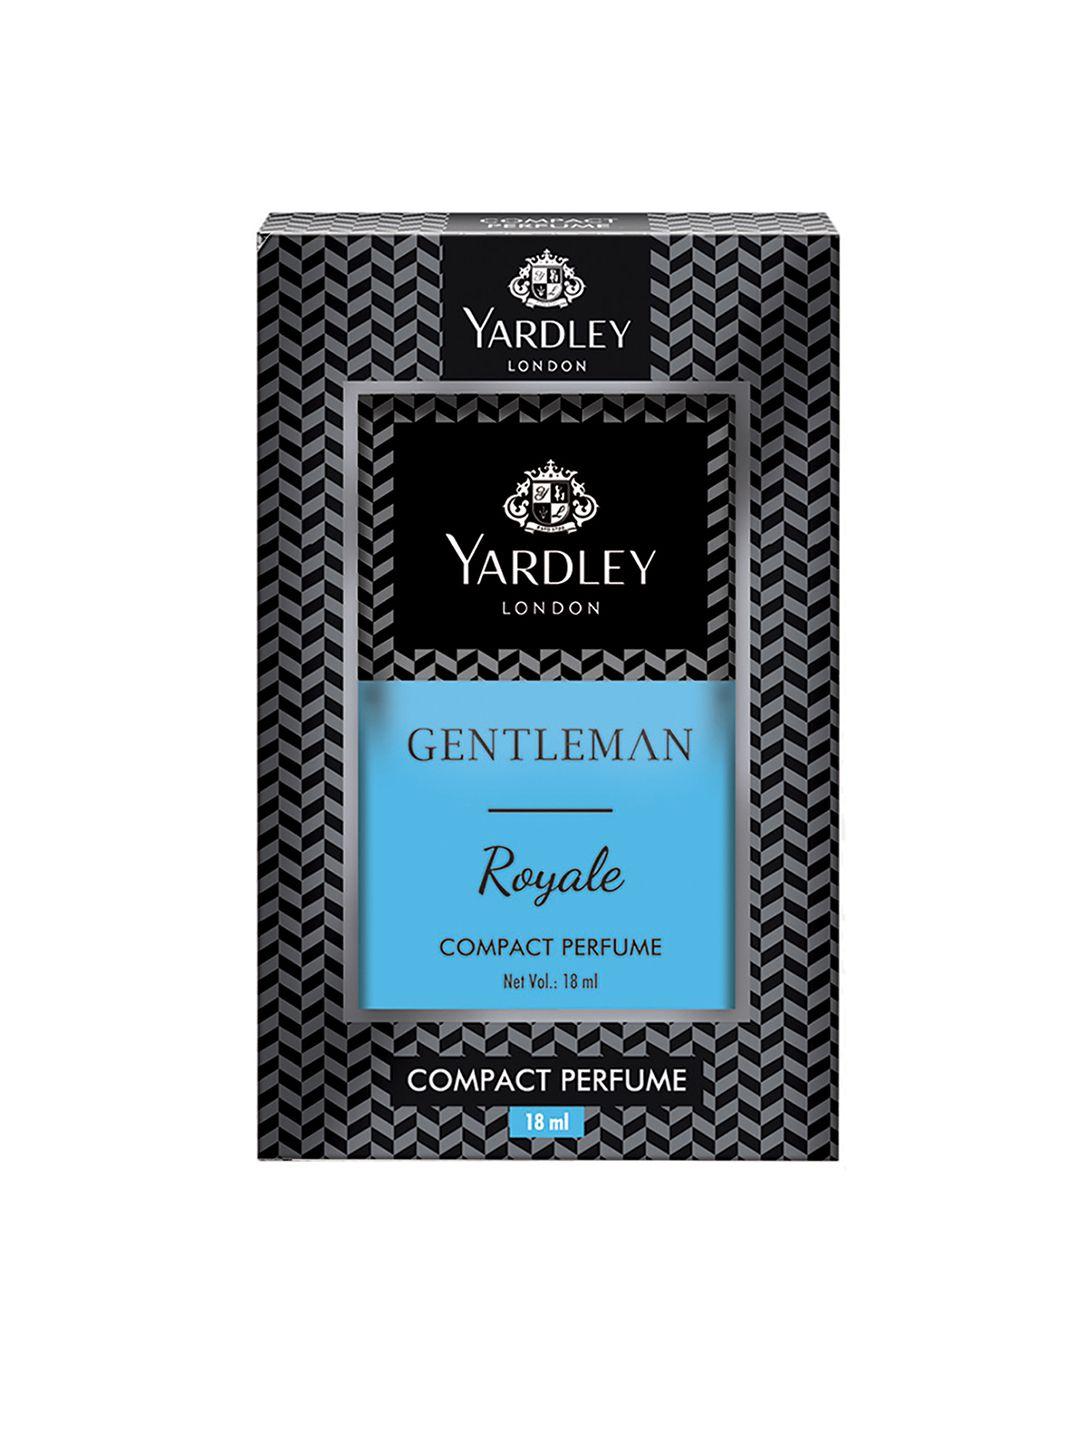 yardley london gentleman royale compact eau de toilette - 18ml